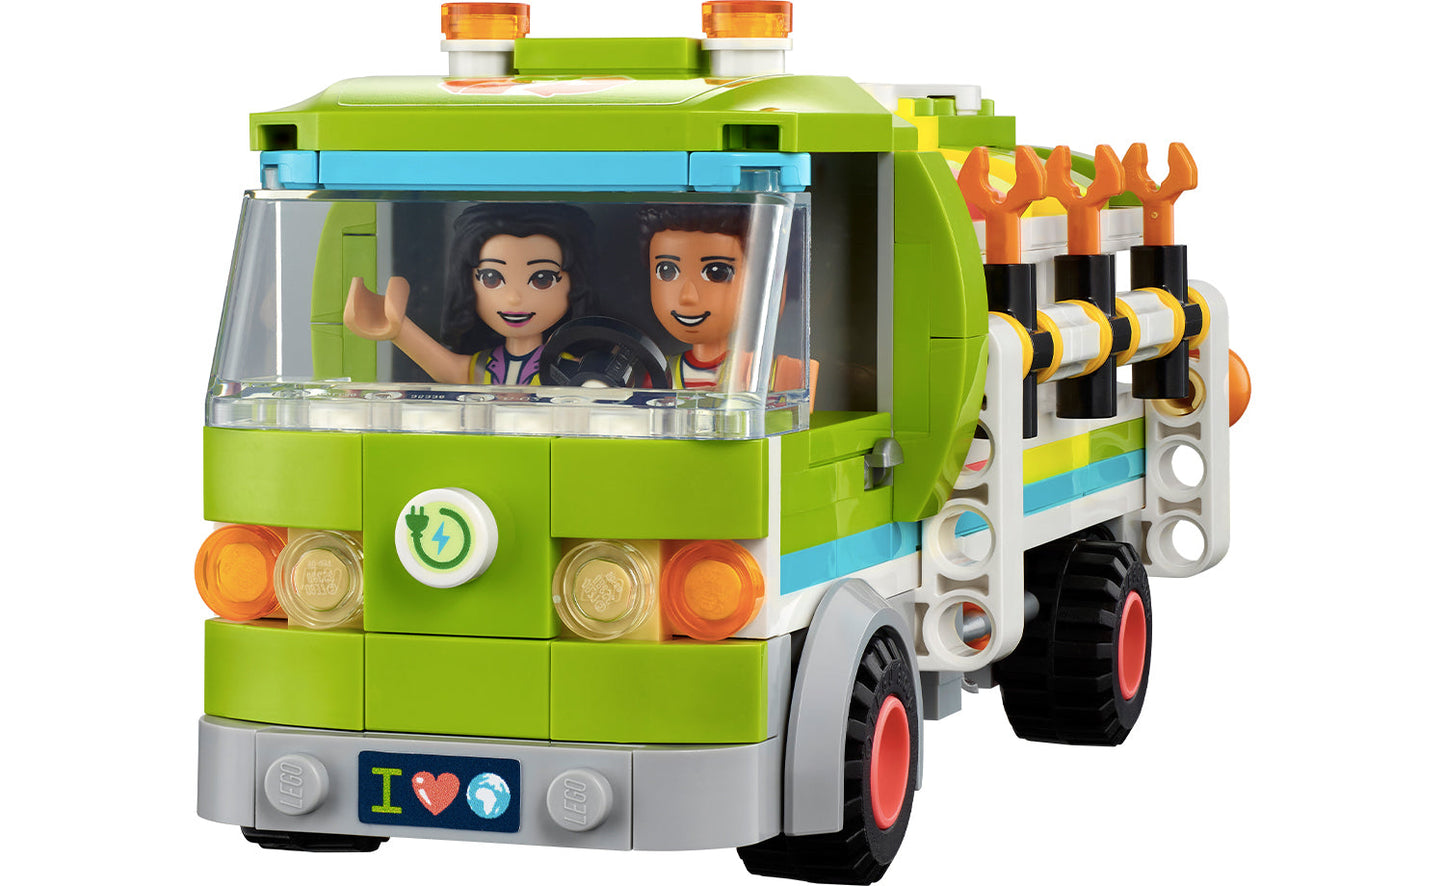 Lego Friends Recycling Truck - 41712